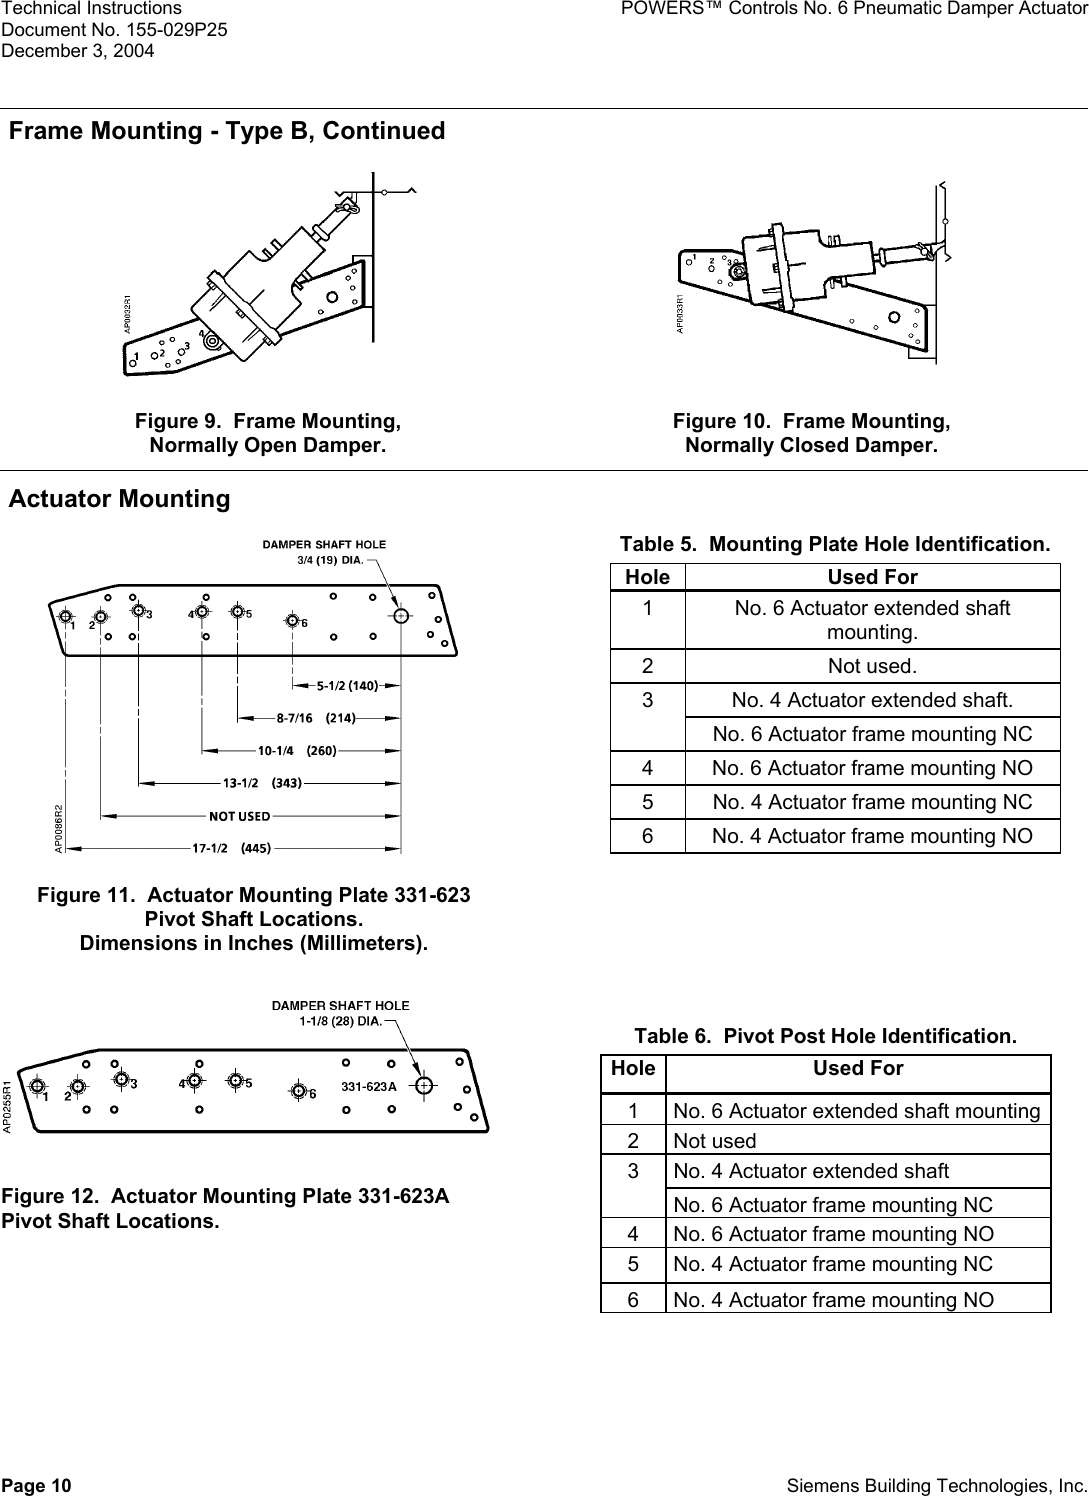 Page 10 of 12 - Siemens Siemens-331-2856-332-2856-Ap-331-3-Users-Manual- Powers Control - No. 6 Pneumatic Damper Actuator  Siemens-331-2856-332-2856-ap-331-3-users-manual